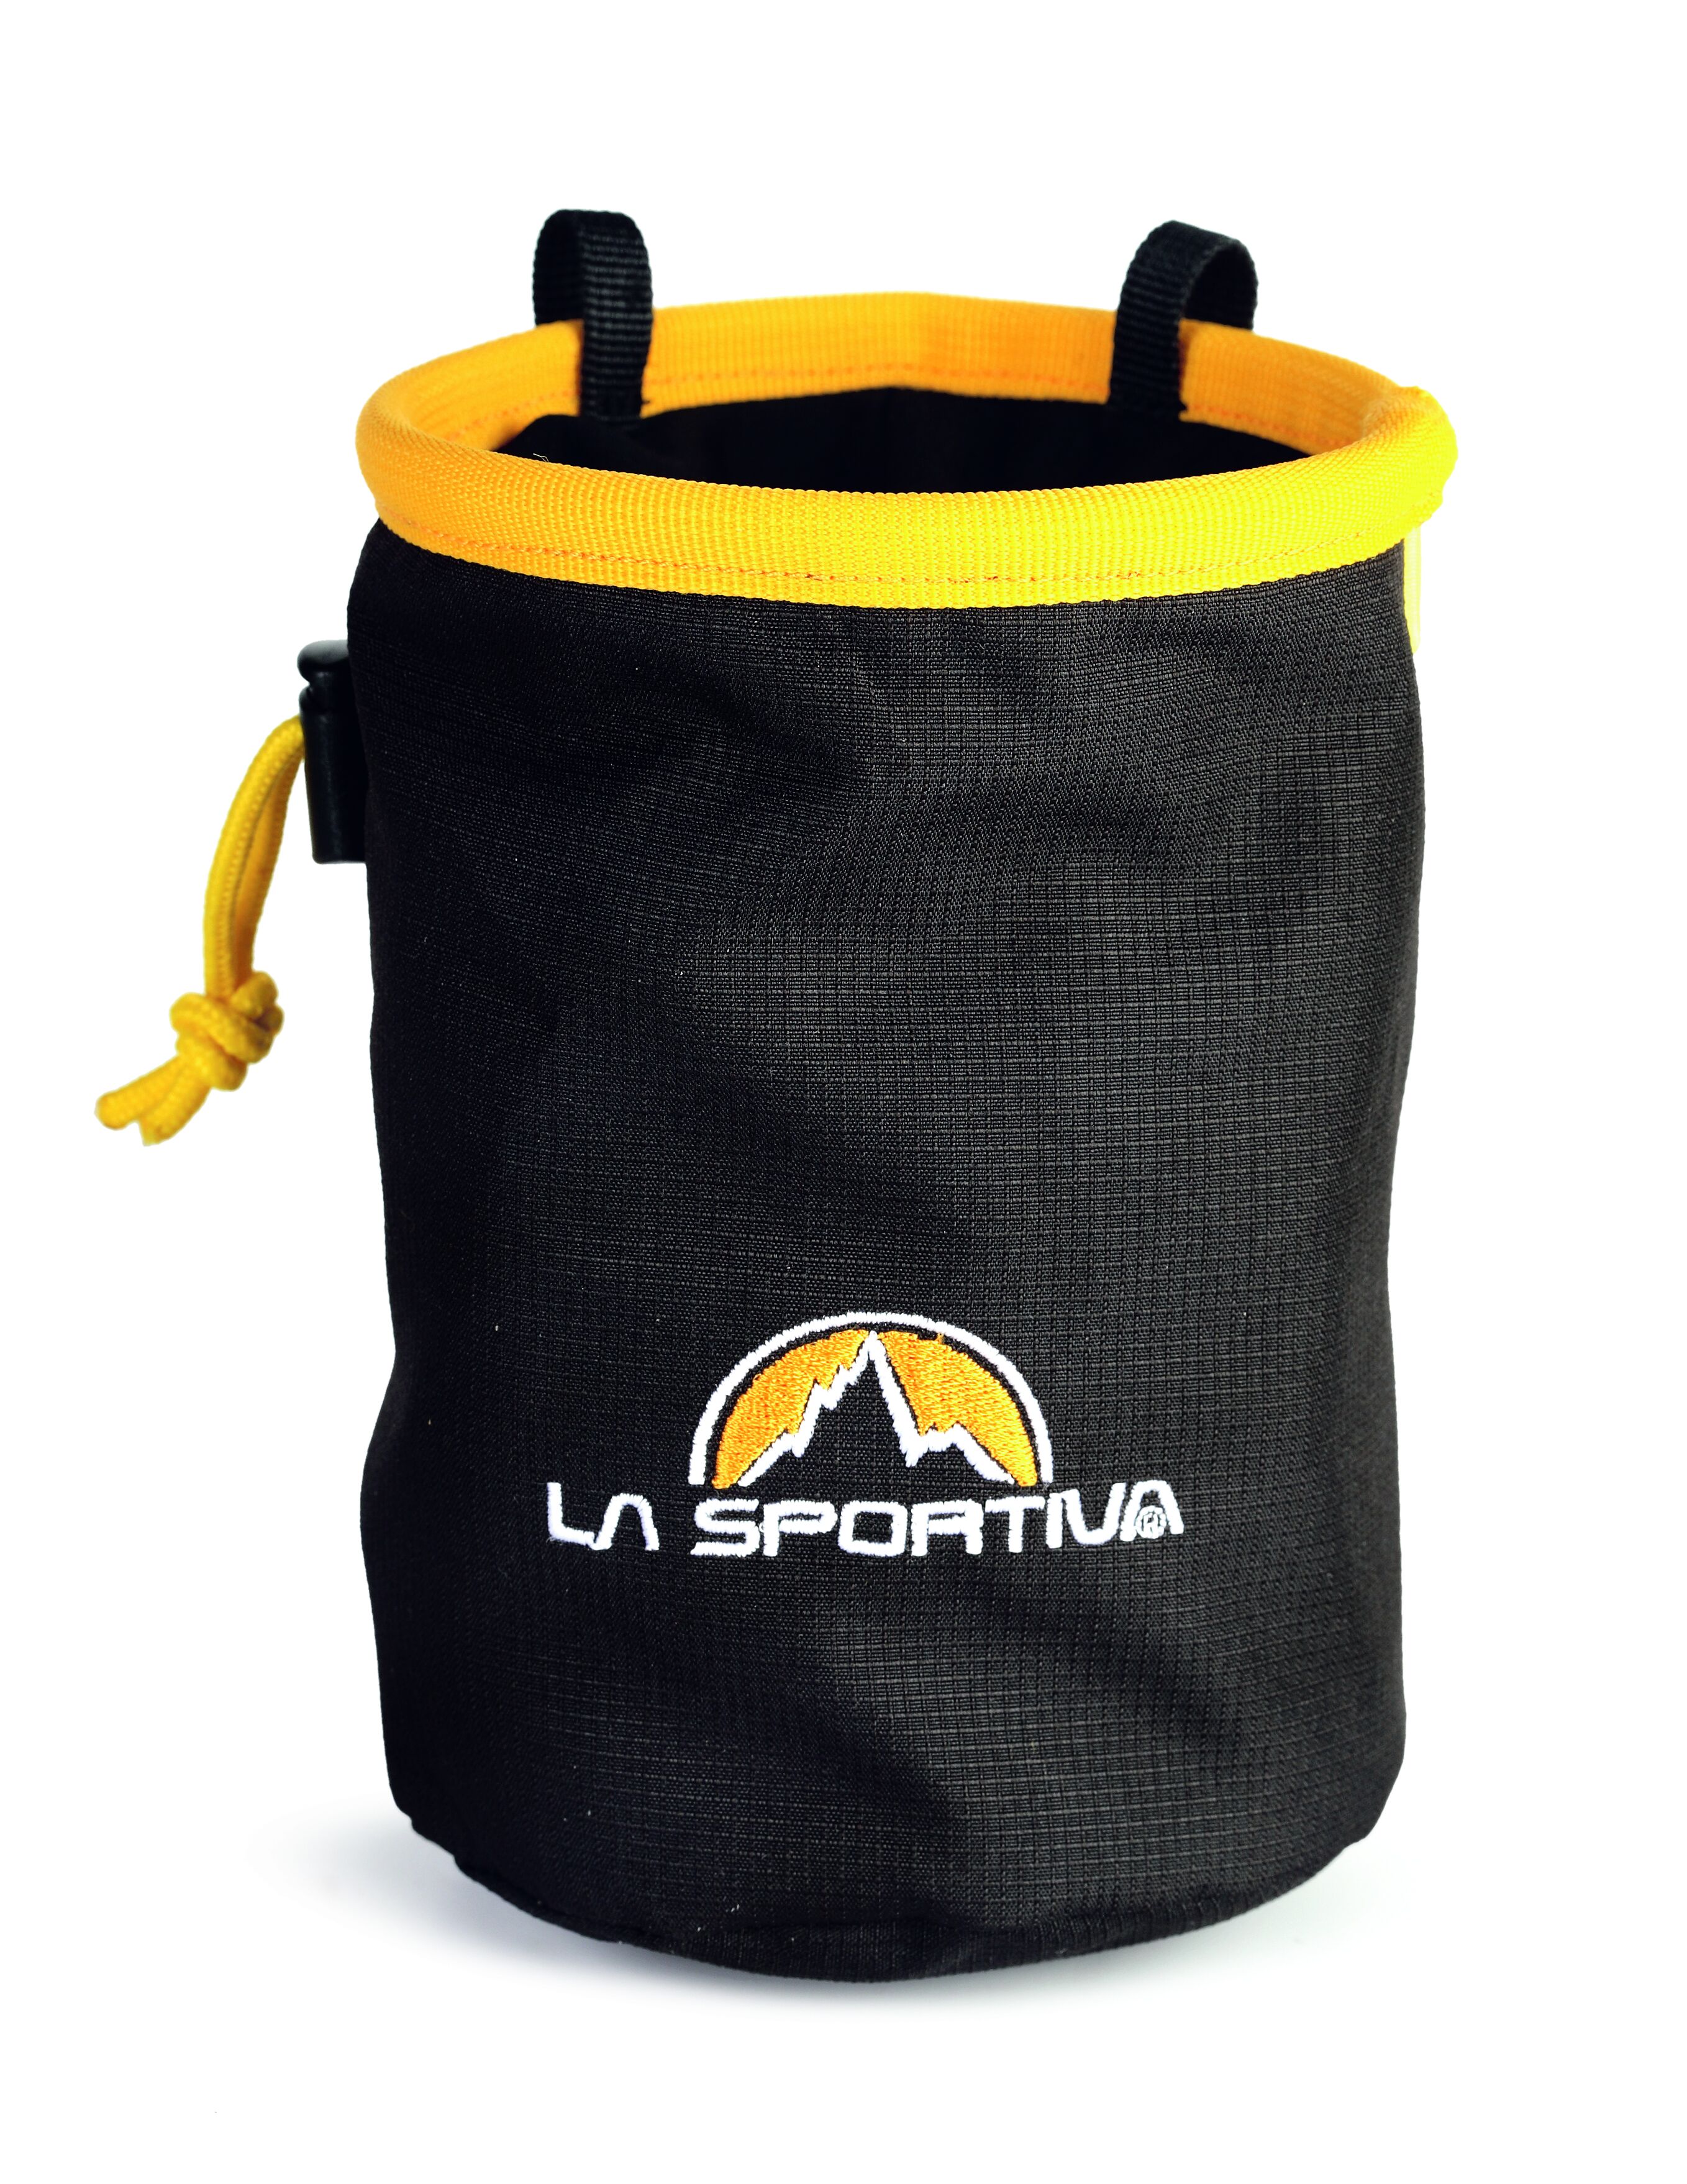 La Sportiva - La Sportiva - Chalk bag